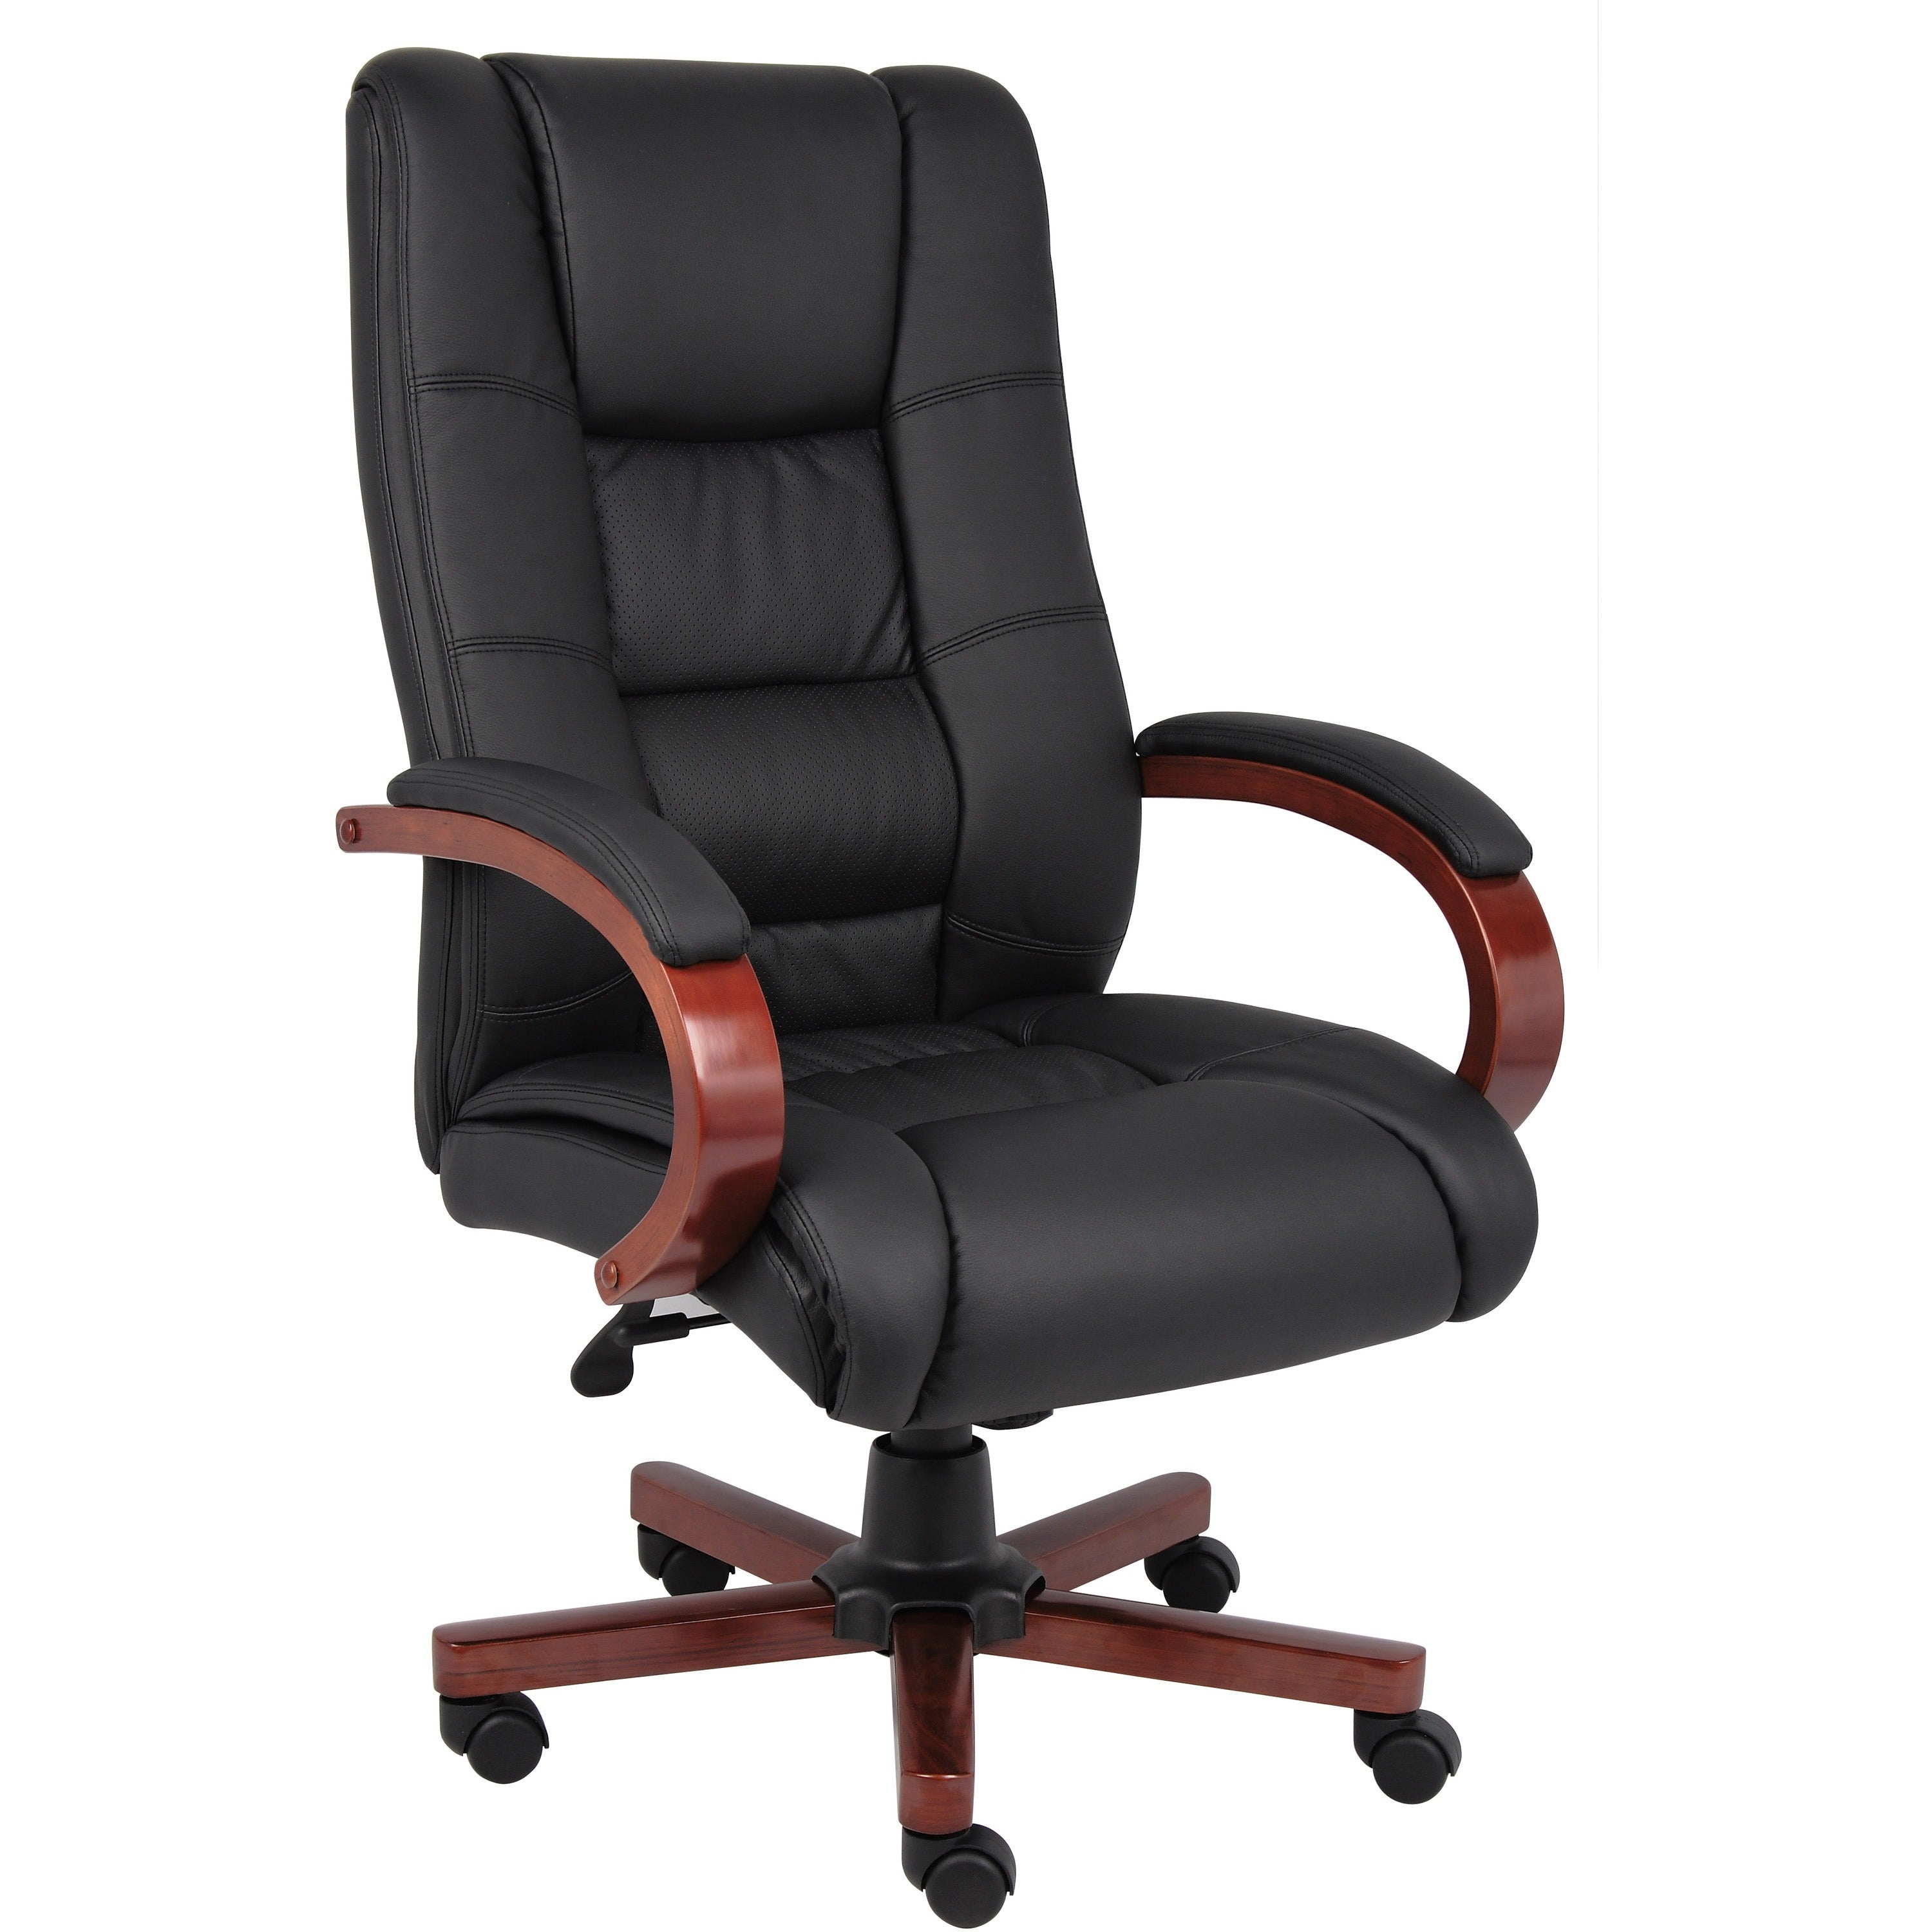 Boss CaressoftPlus High-Back Executive Chair - Black Vinyl Seat - Black, Cherry Wood Wood Frame - 5-star Base - 1 Each - 1